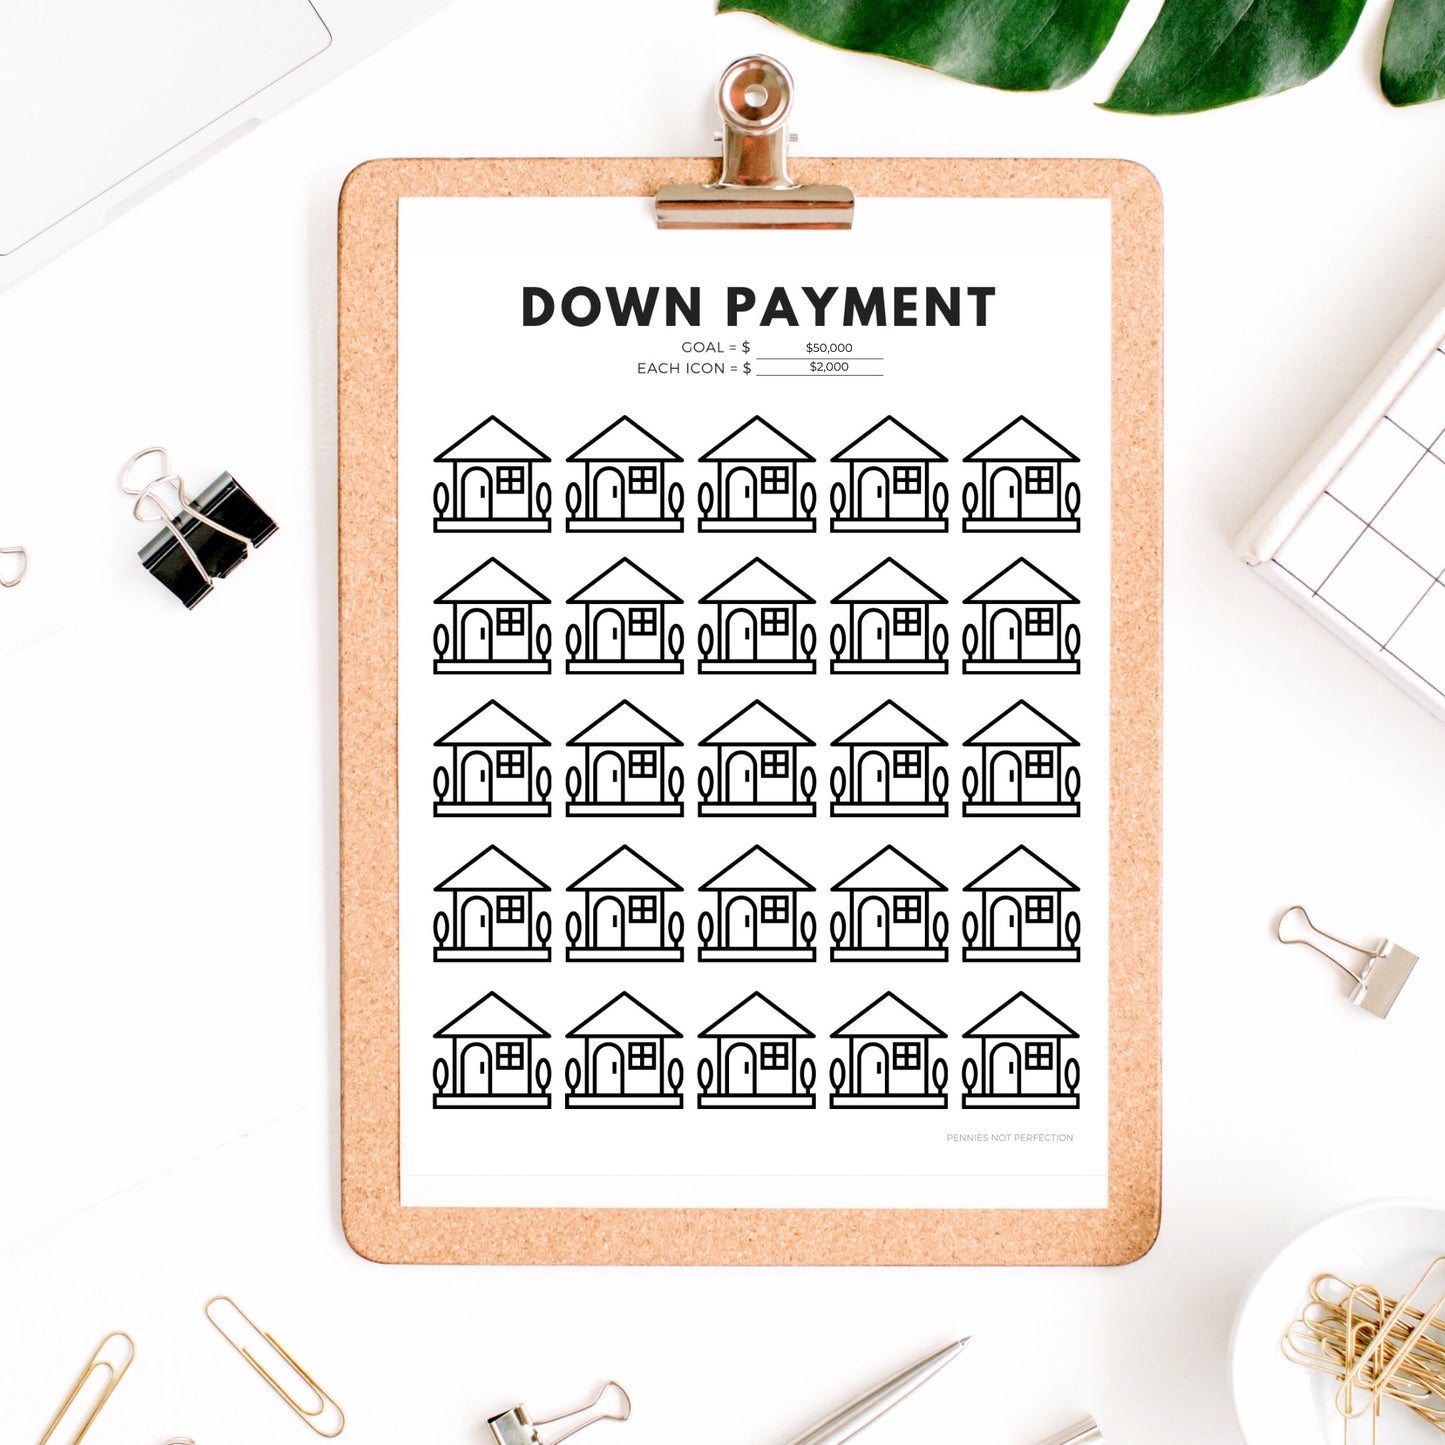 Down Payment Savings Tracker | House Down Payment Savings Printable